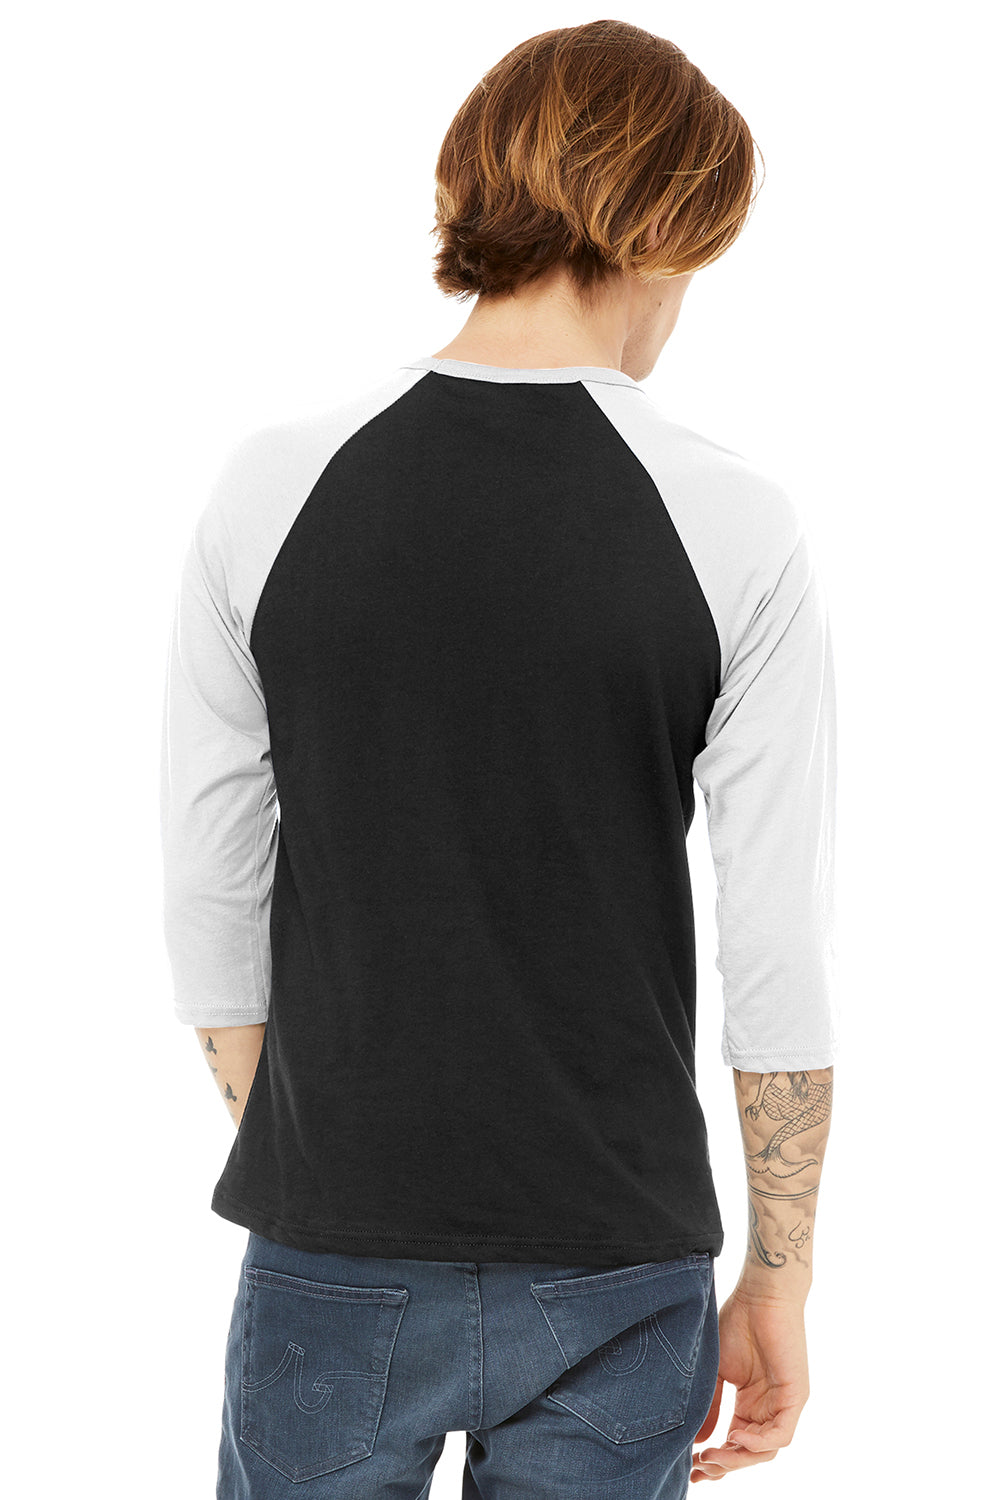 Bella + Canvas BC3200/3200 Mens 3/4 Sleeve Crewneck T-Shirt Black/White Model Back